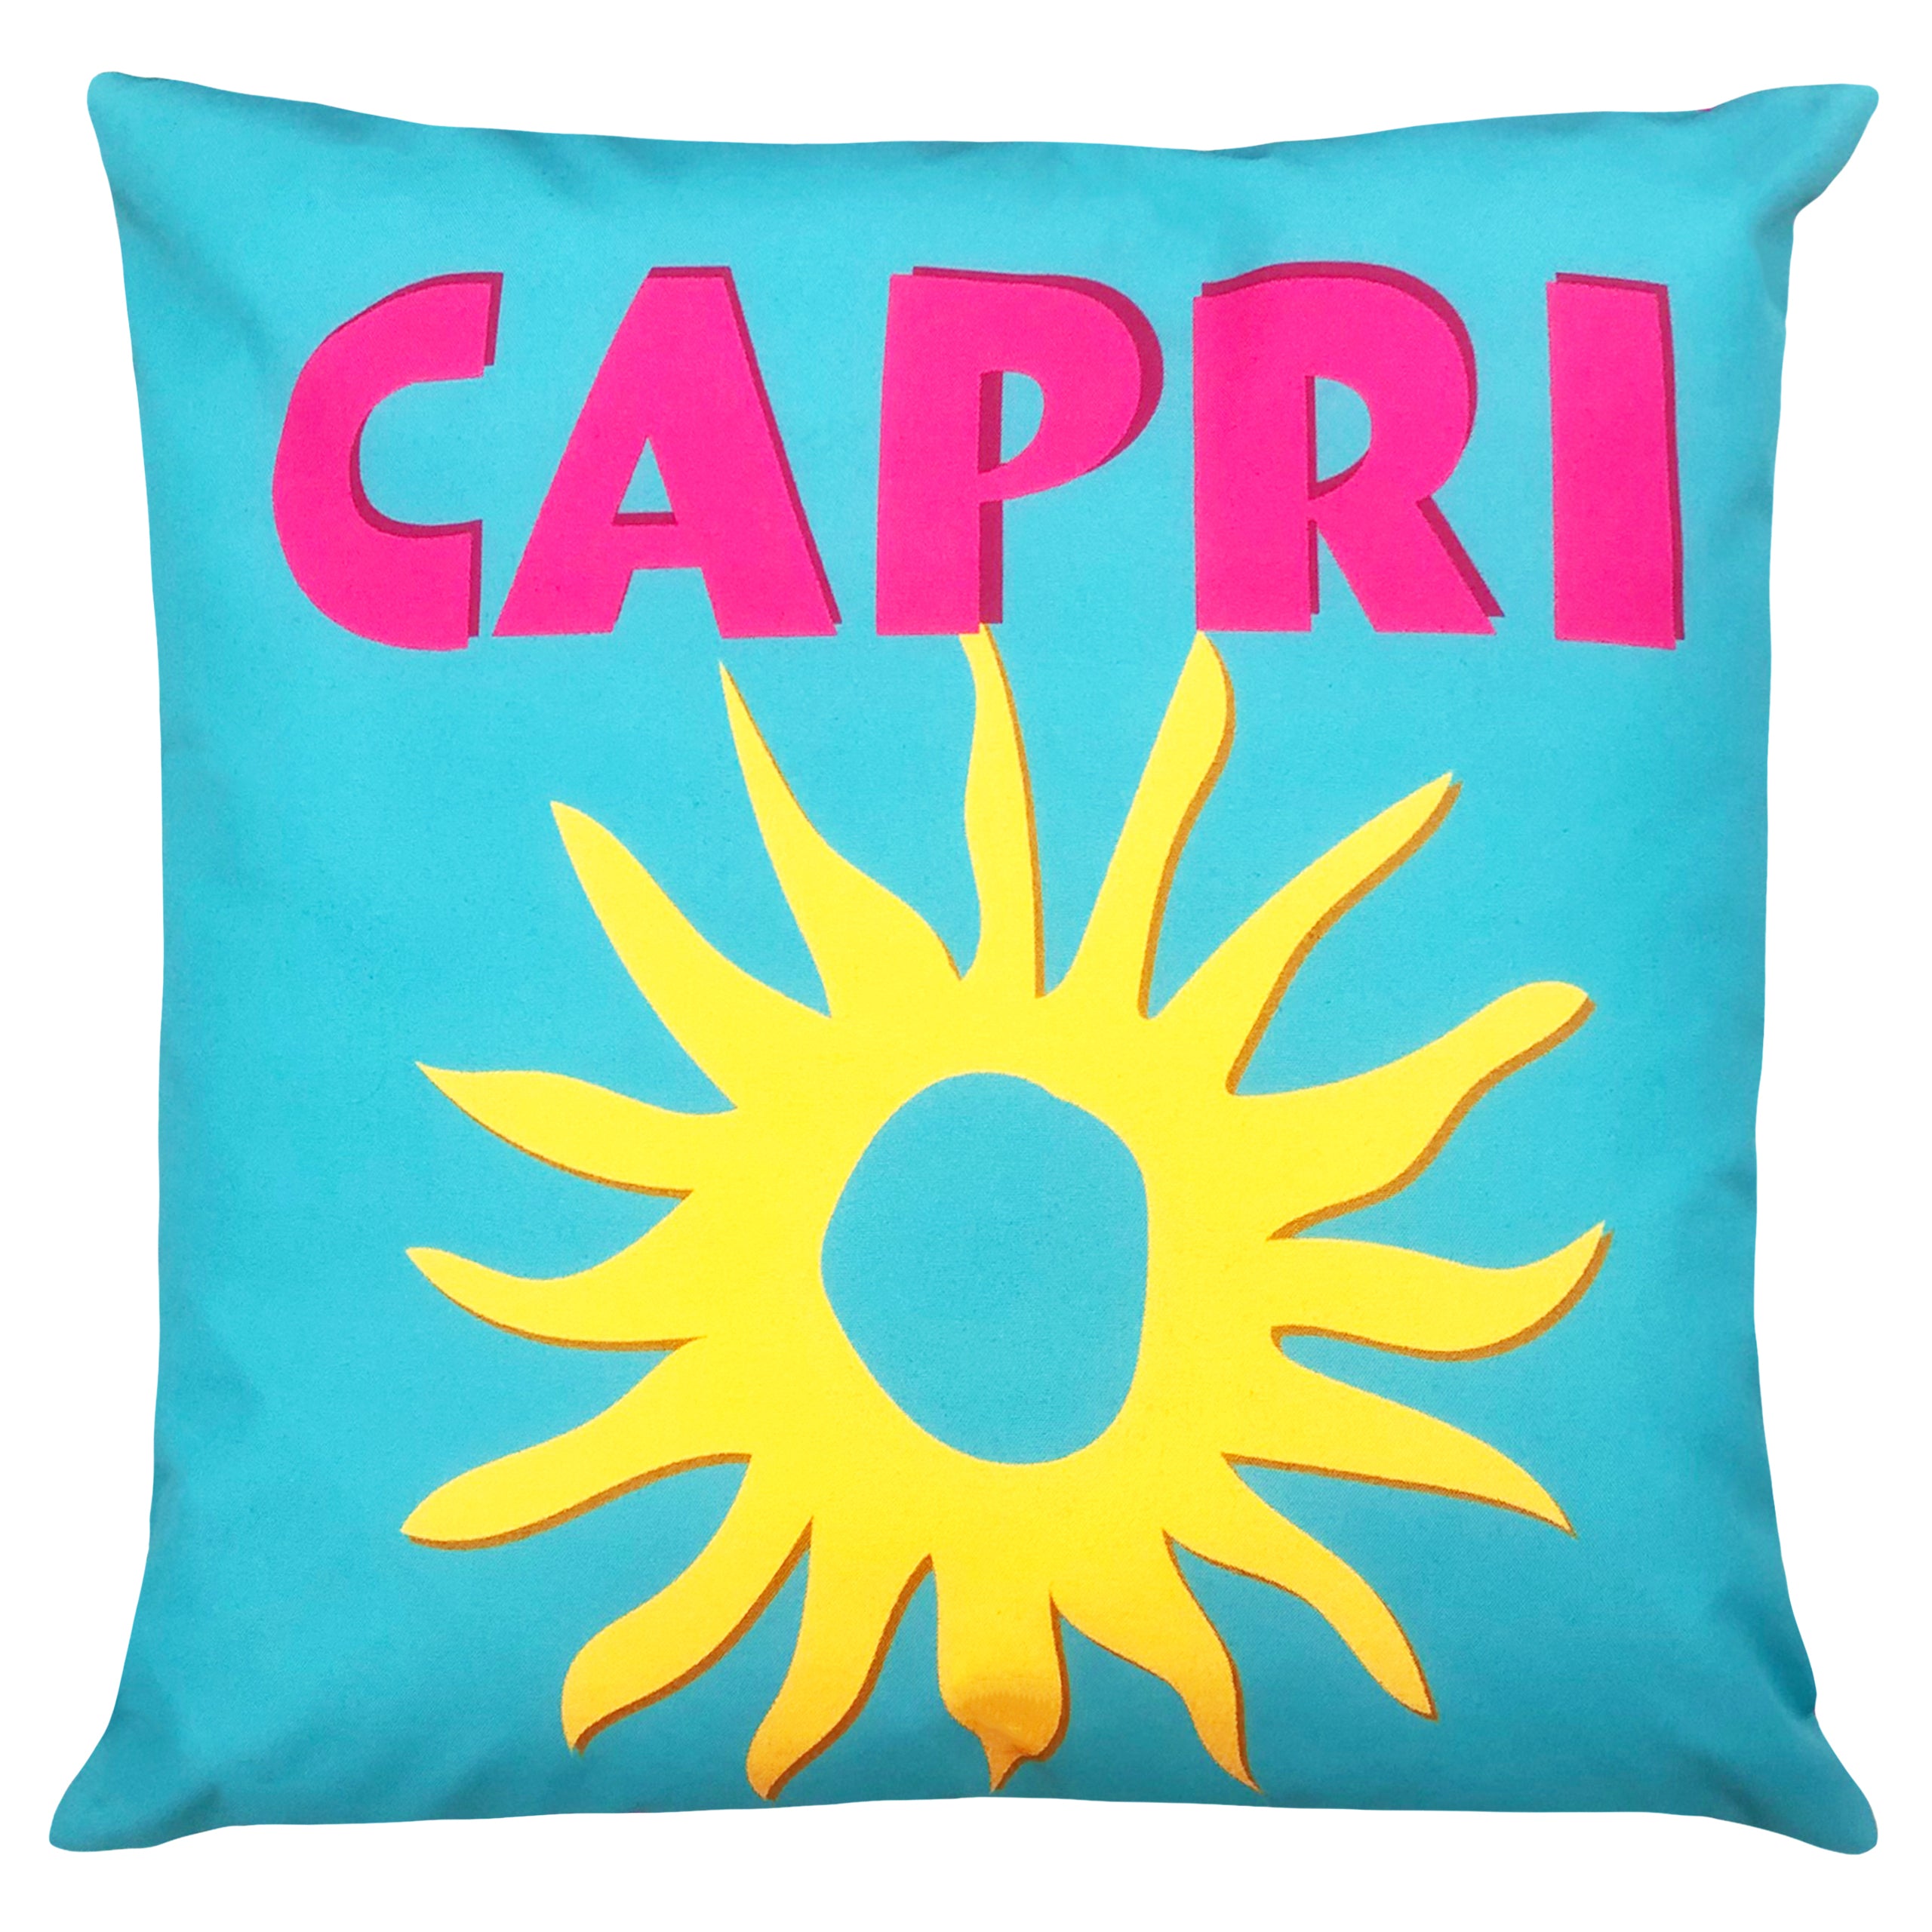 Capri 43cm Reversible Outdoor Polyester Square Cushion Roseland